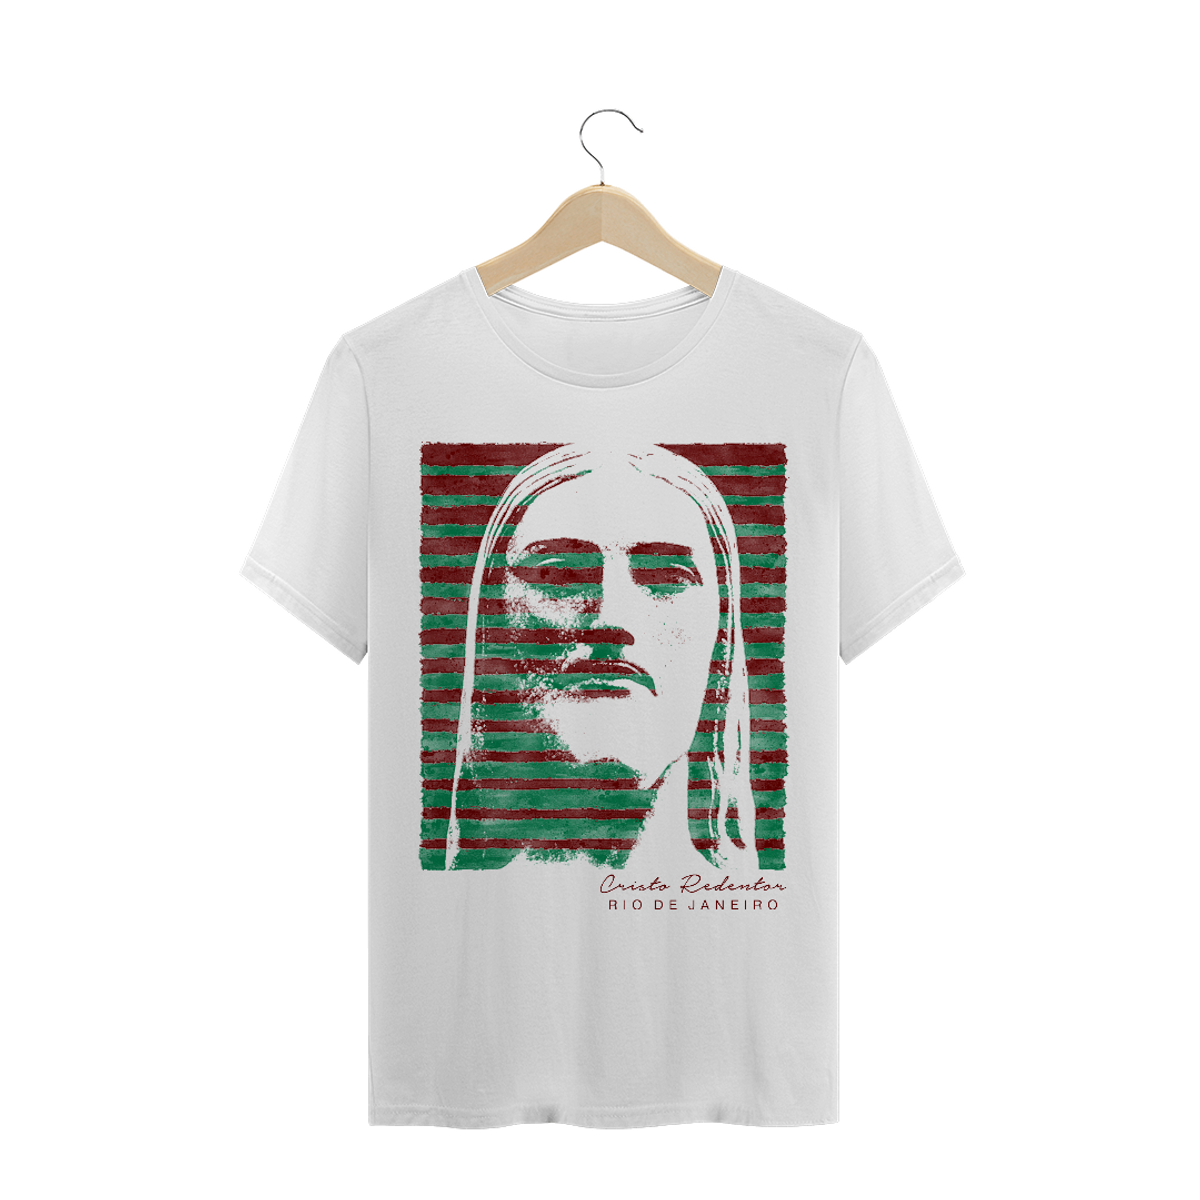 Nome do produto: Camiseta Masculina Cristo Redentor verde e grená